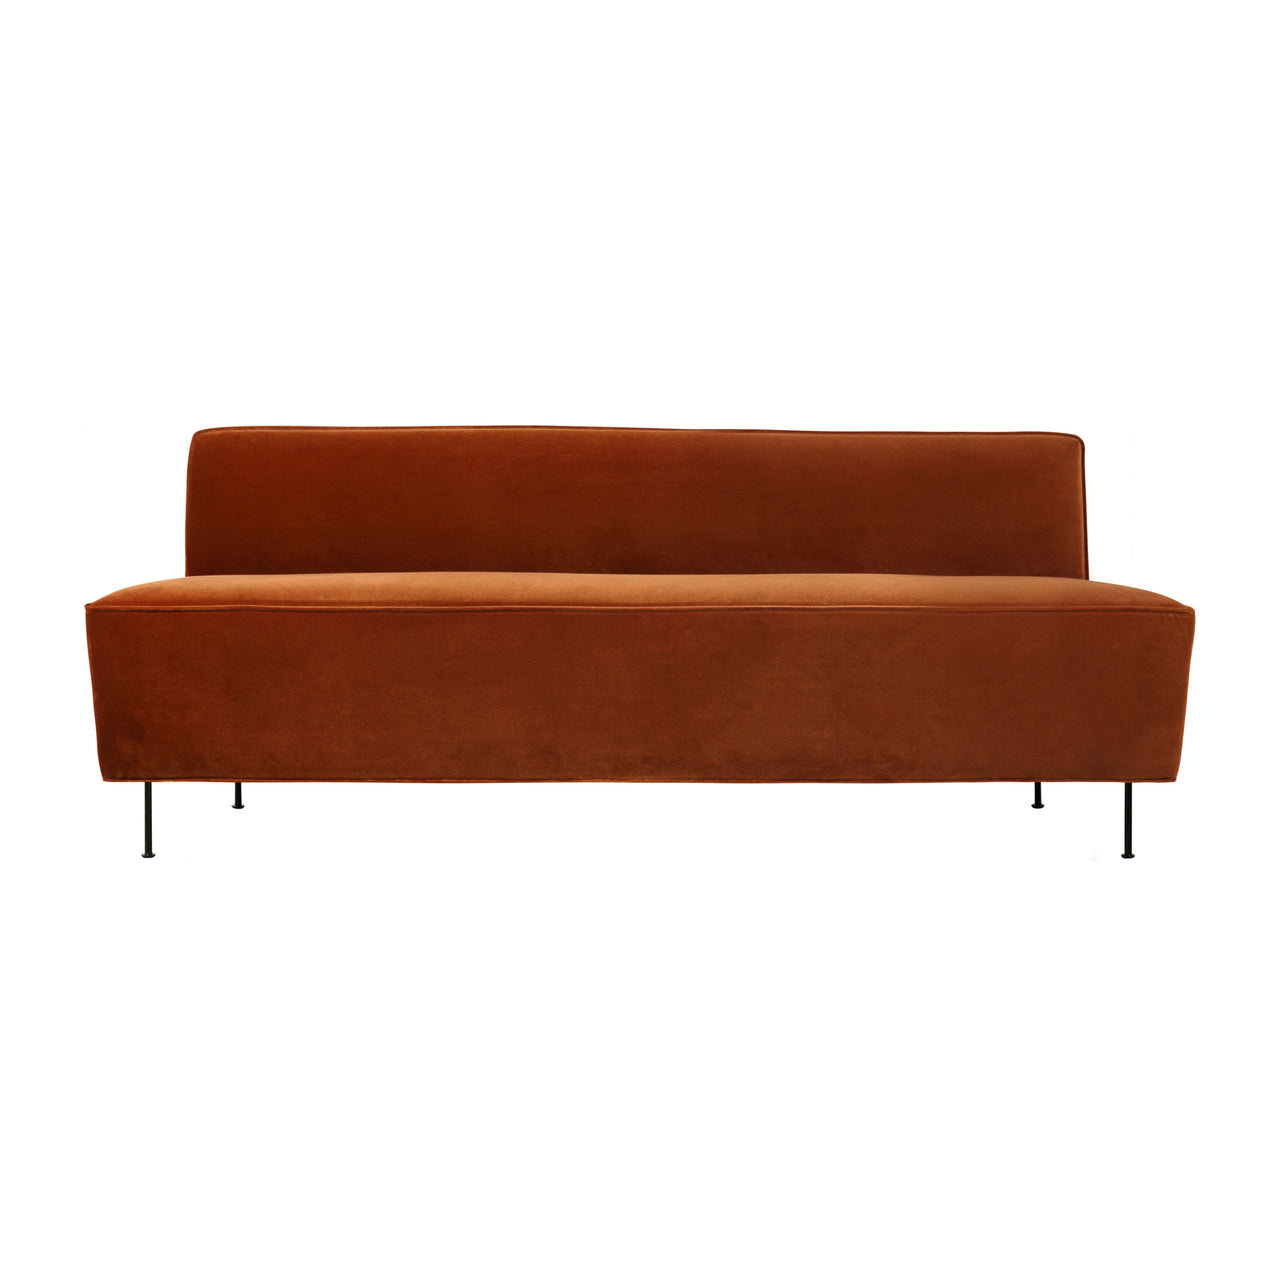 Modern Line Sofa: Dining Height + Medium - 78.7